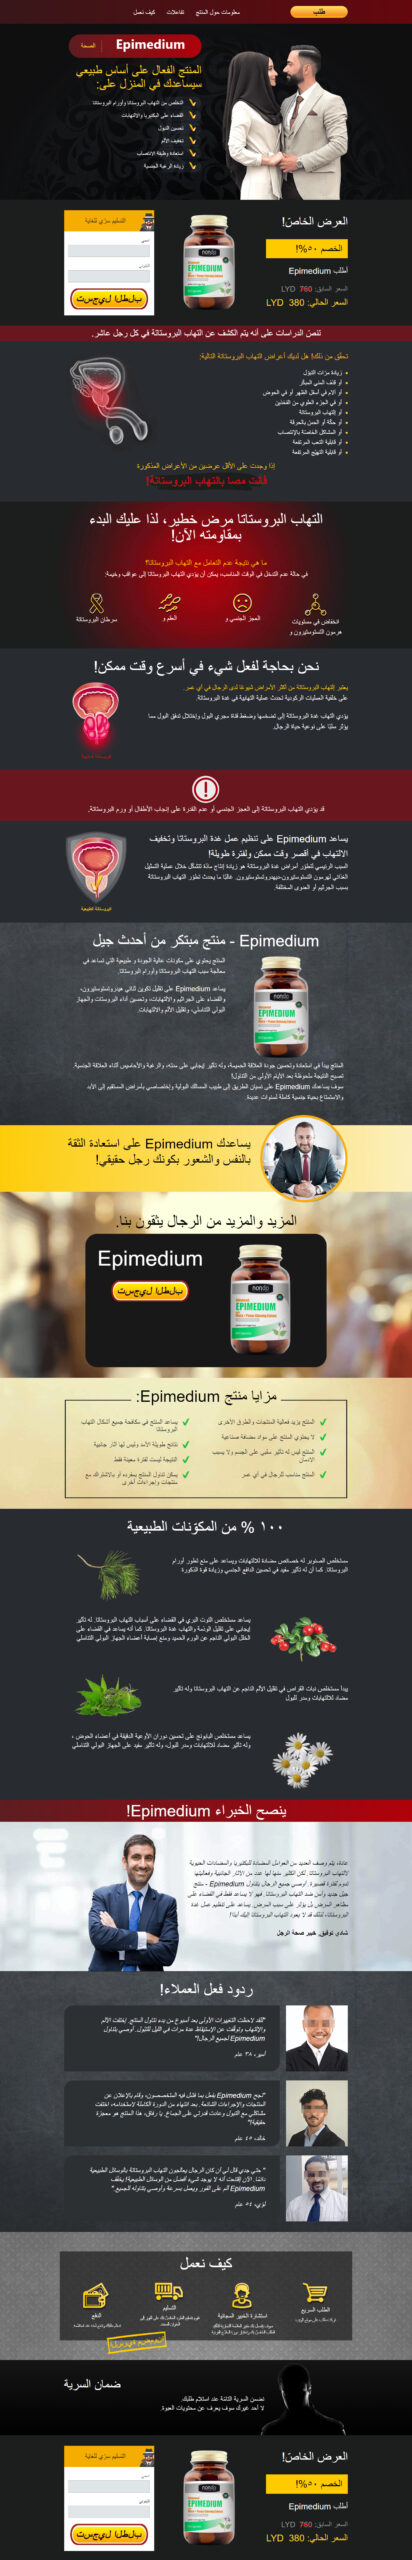 epimedium capsule libyan arab jamahiriya